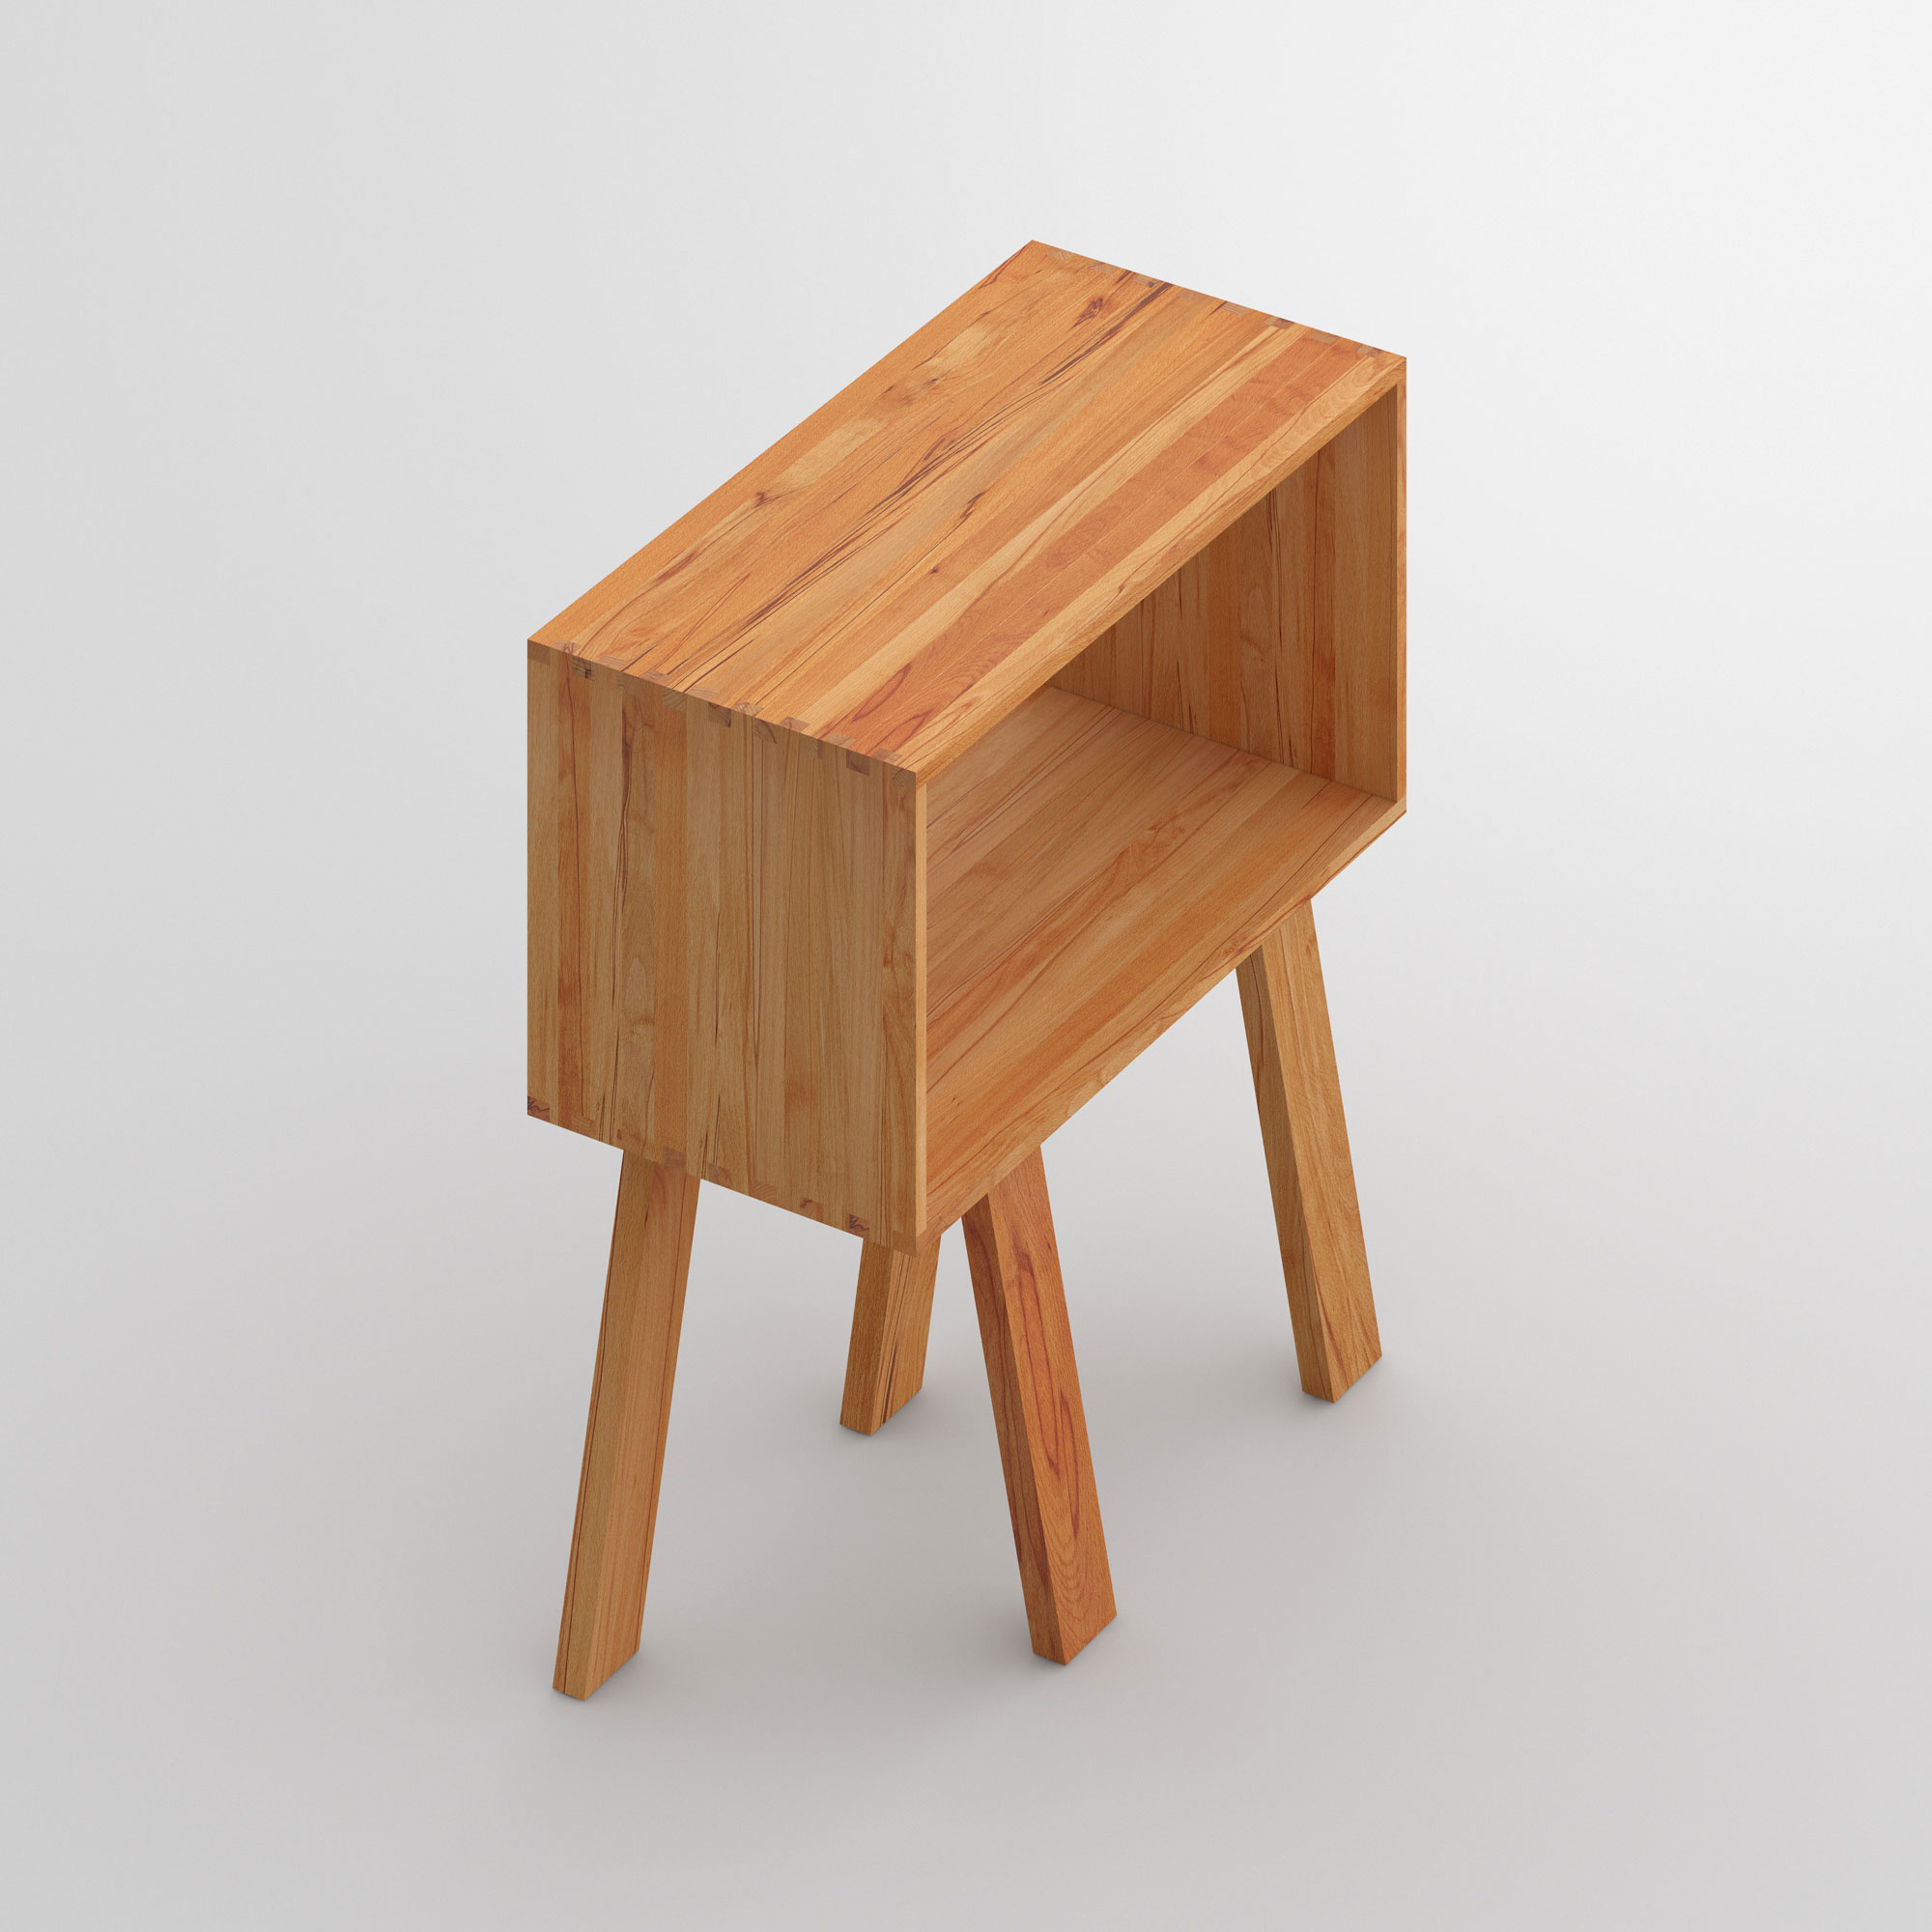 Designer Solid Wood Shelf GO cam1 custom made in solid wood by vitamin design